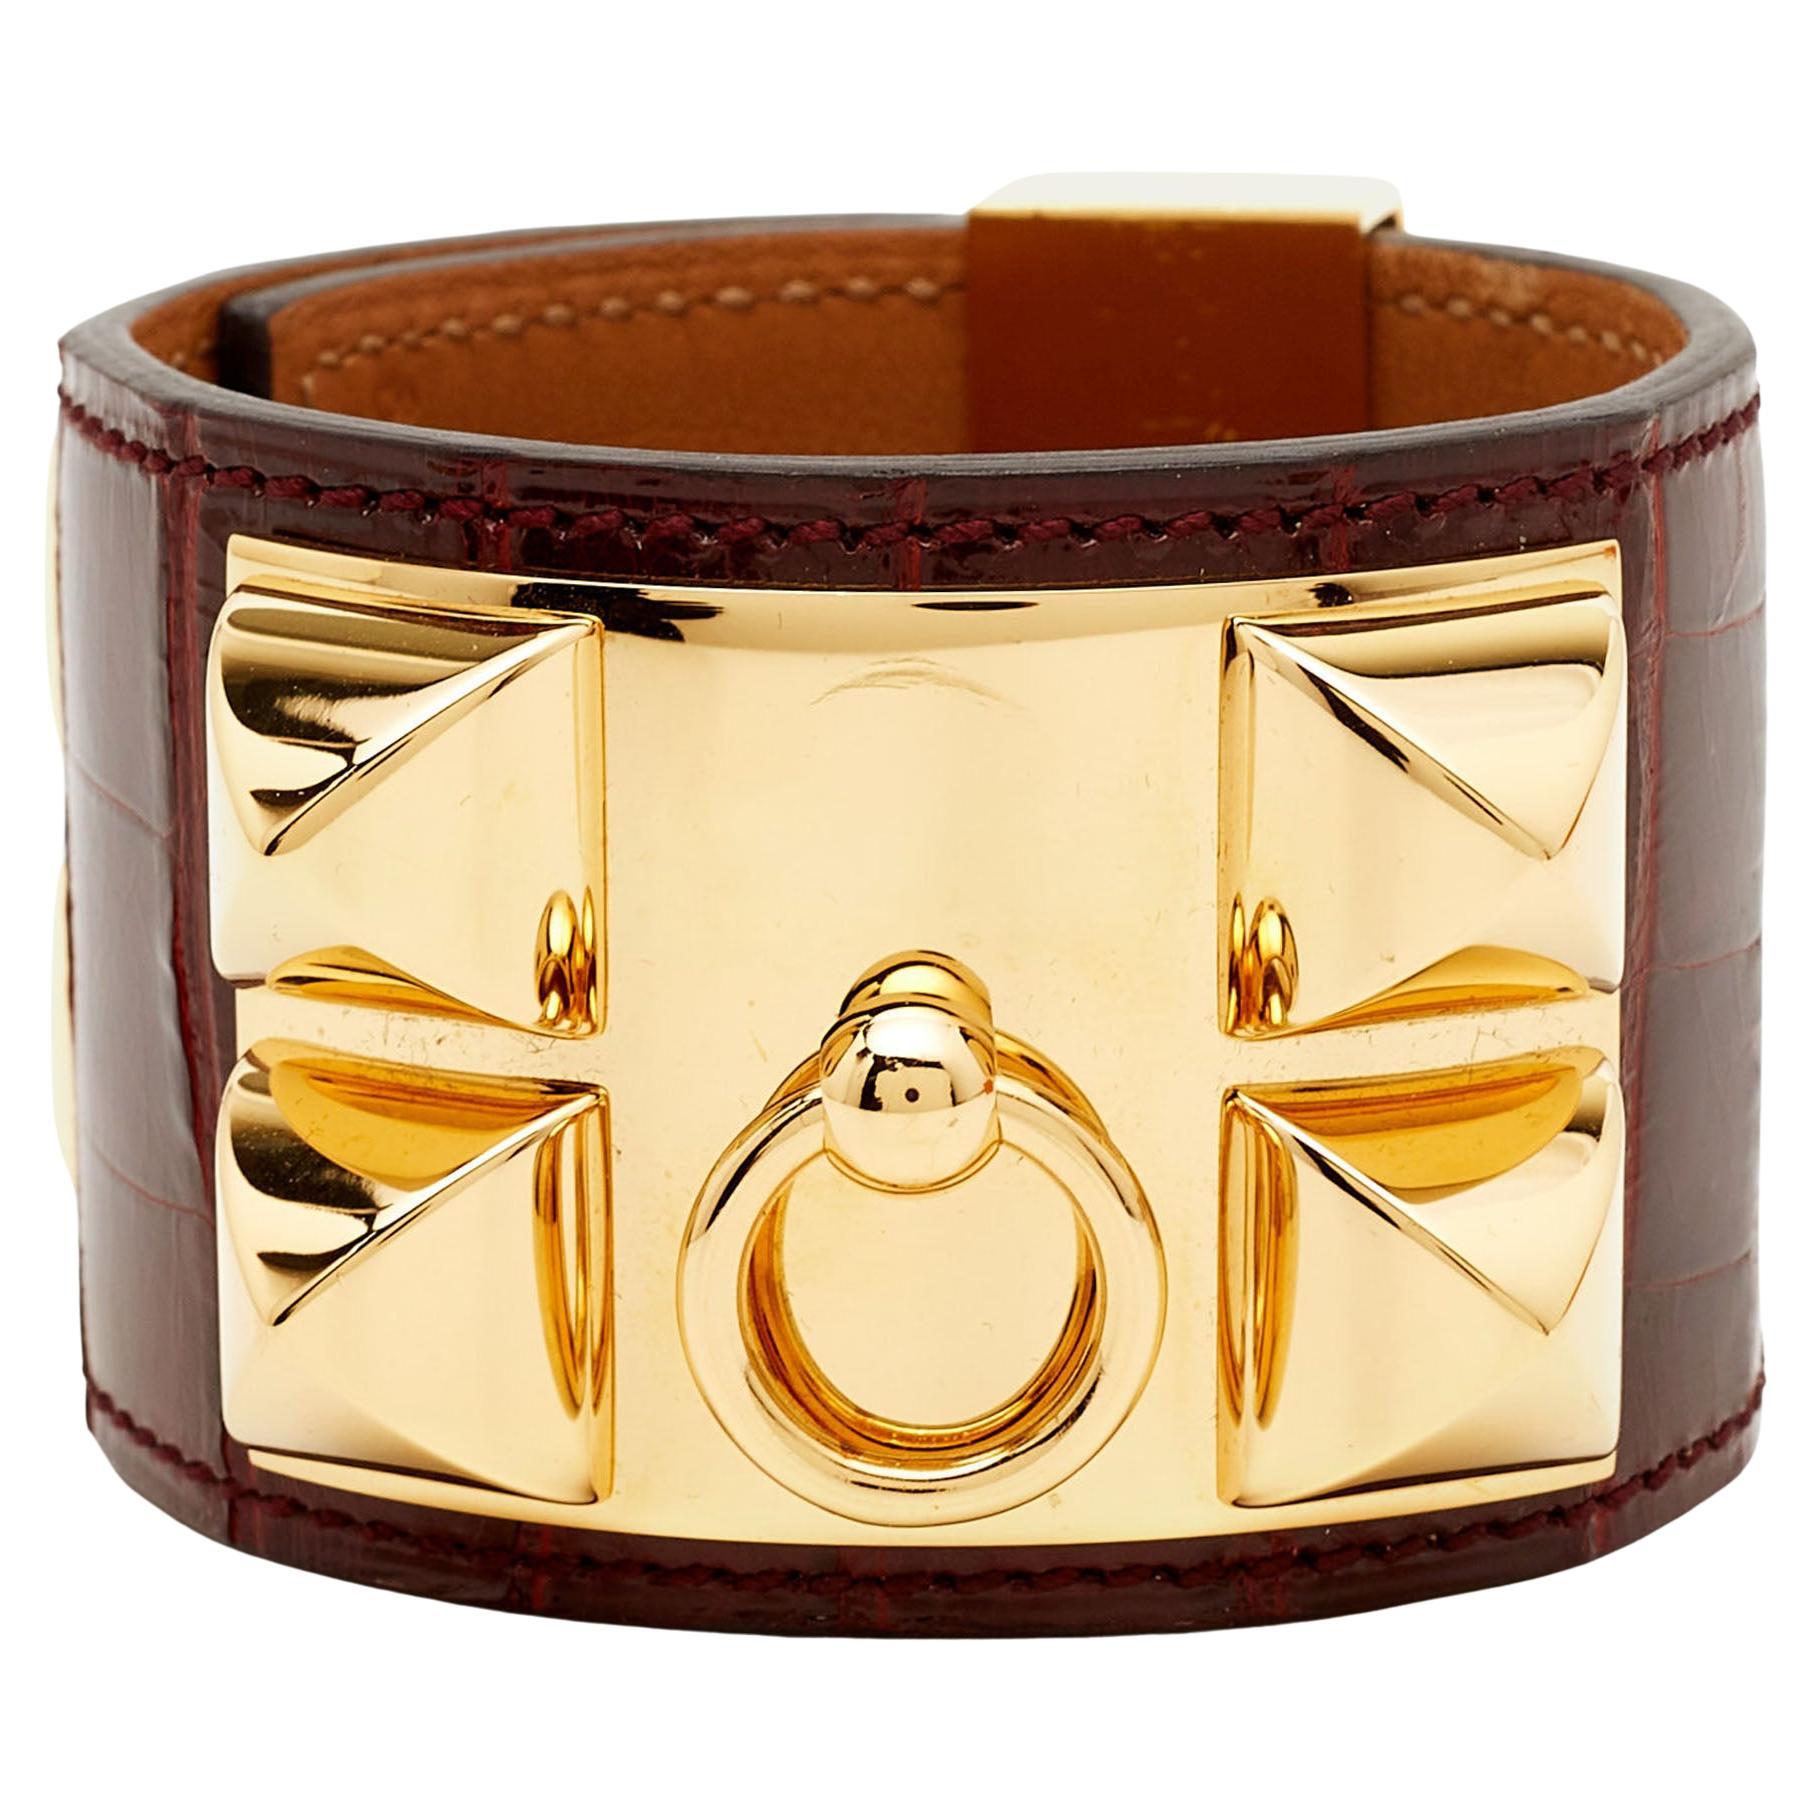 Hermes Collier De Chien Alligator Leather Gold Plated Bracelet